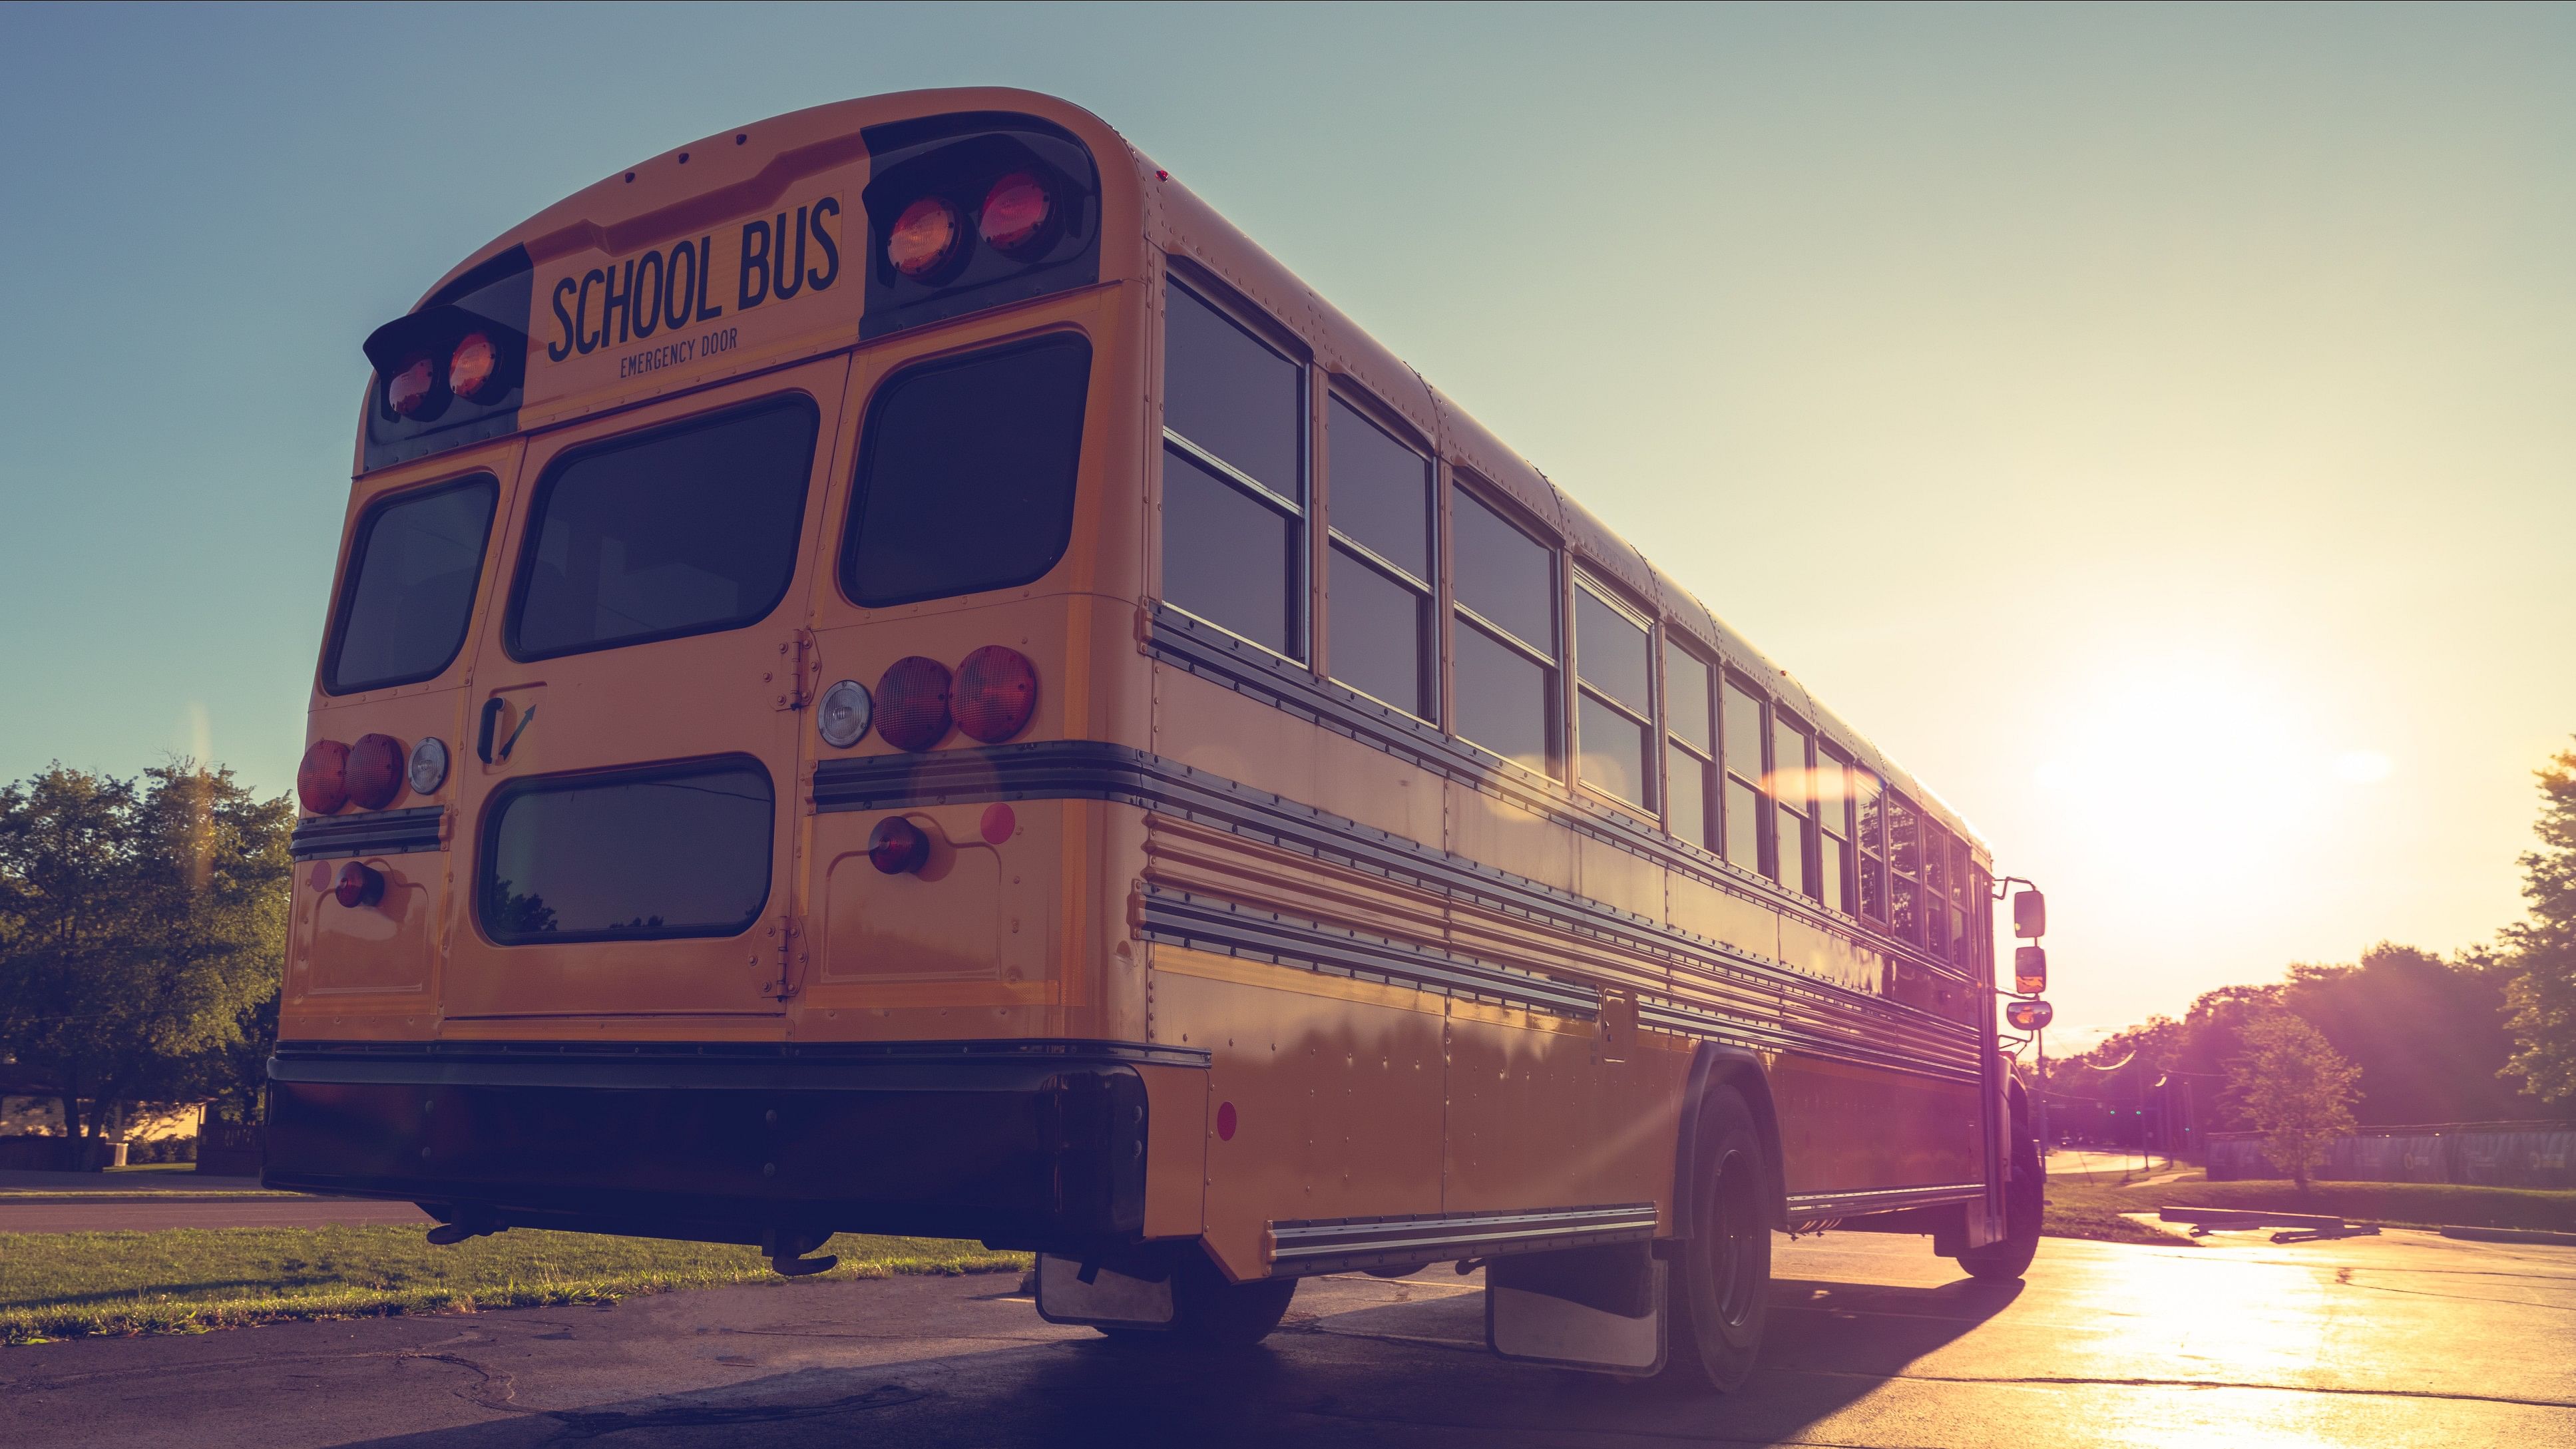 <div class="paragraphs"><p>Representative image showing a school bus.</p></div>